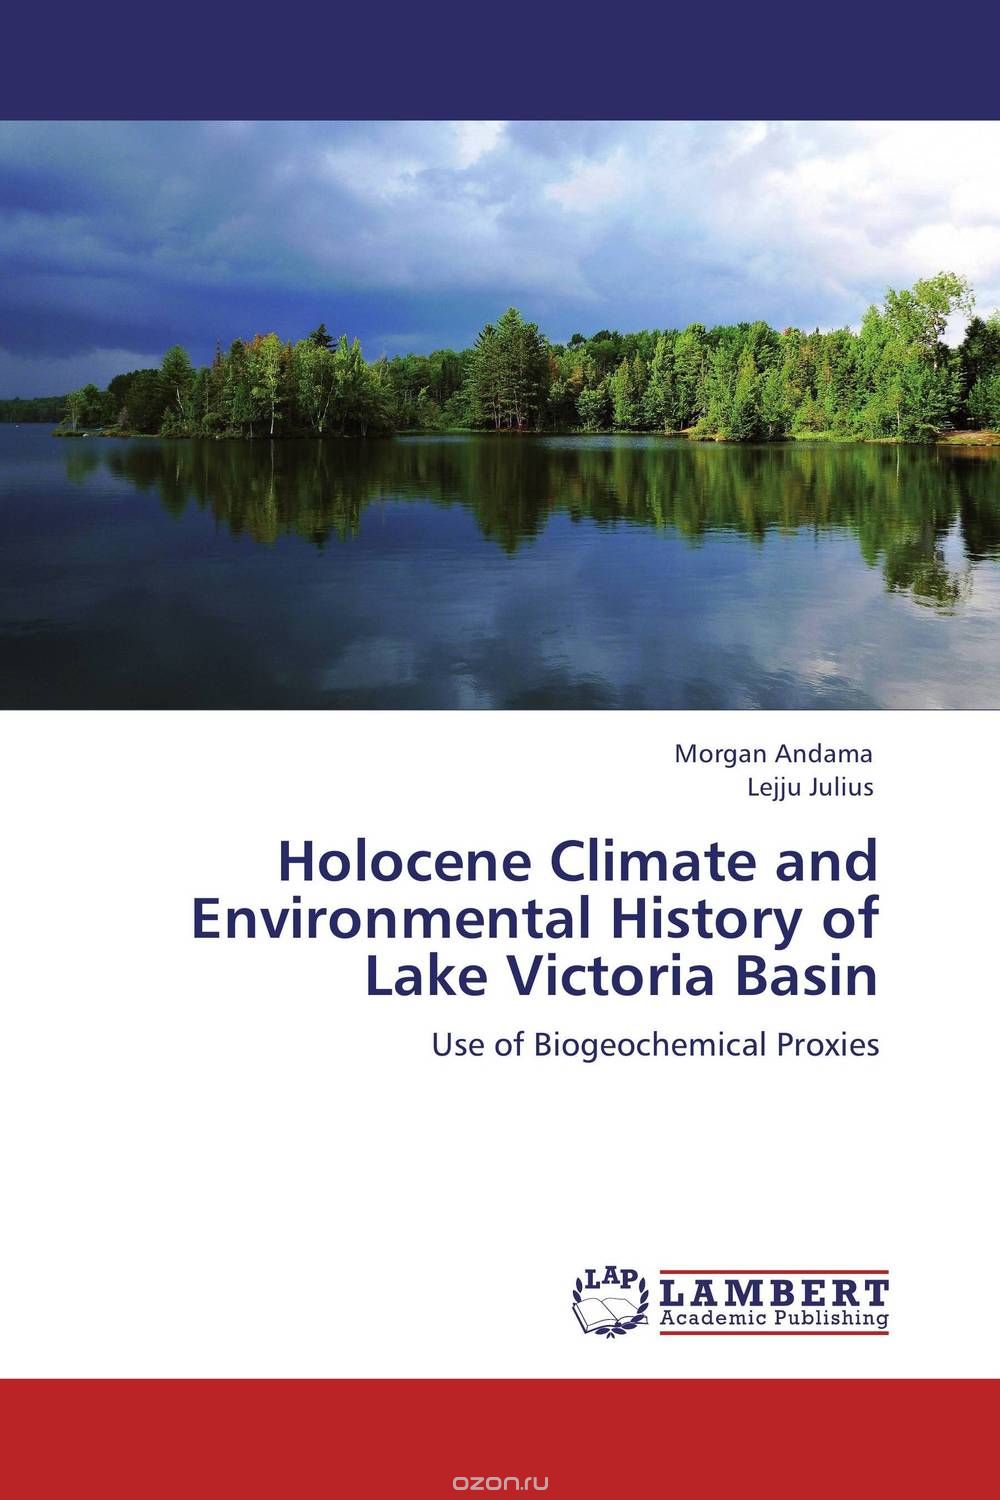 Скачать книгу "Holocene Climate and Environmental History of Lake Victoria Basin"